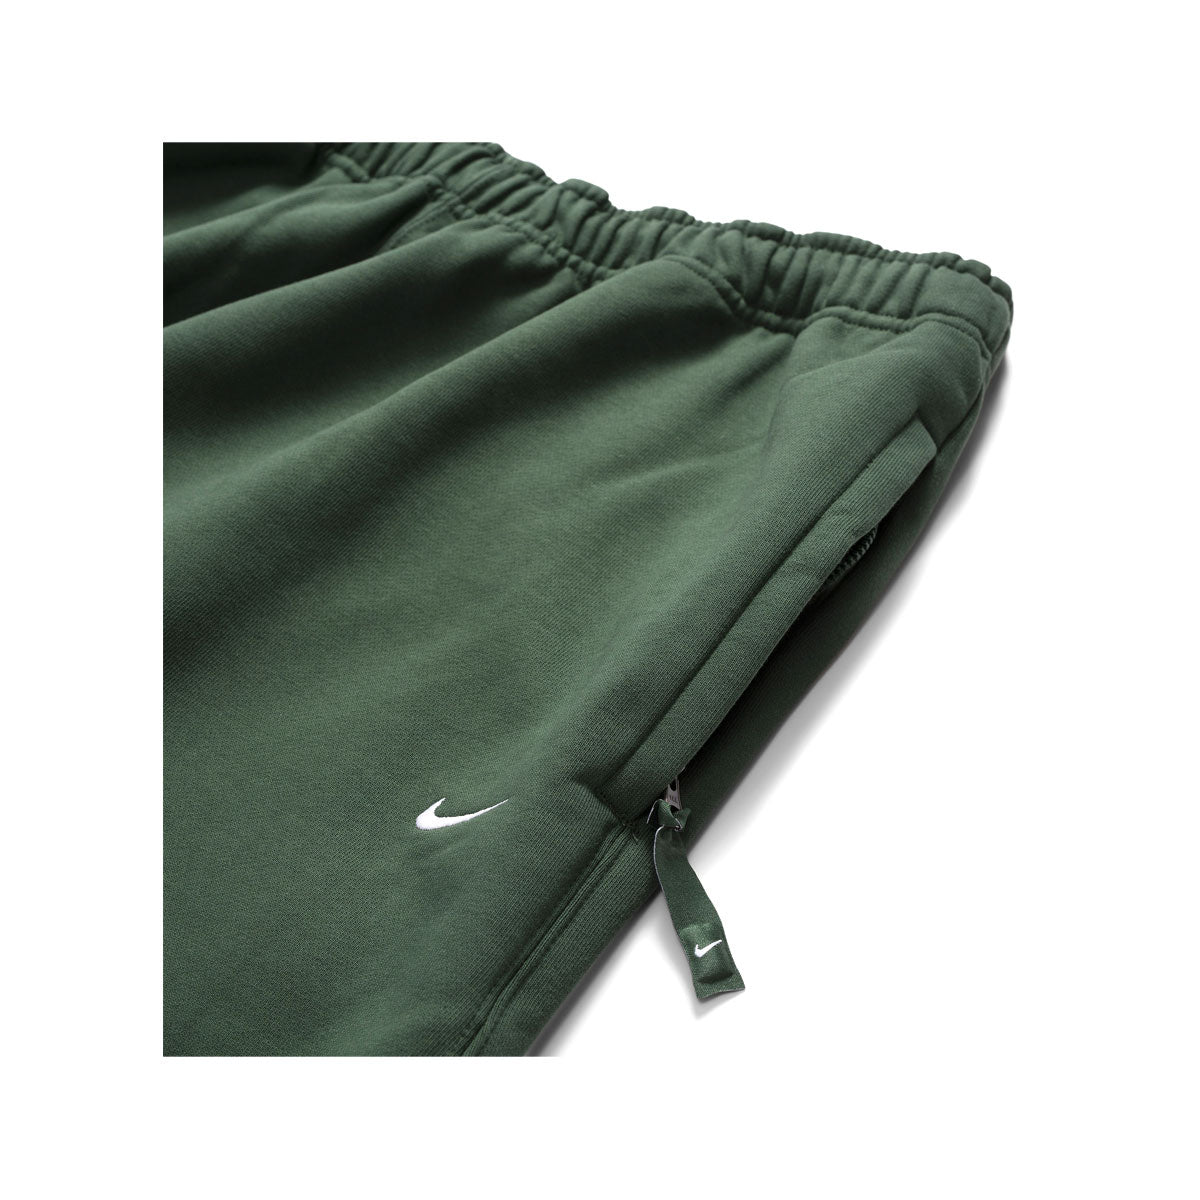 Nike Men's Solo Swoosh Fleece Pants